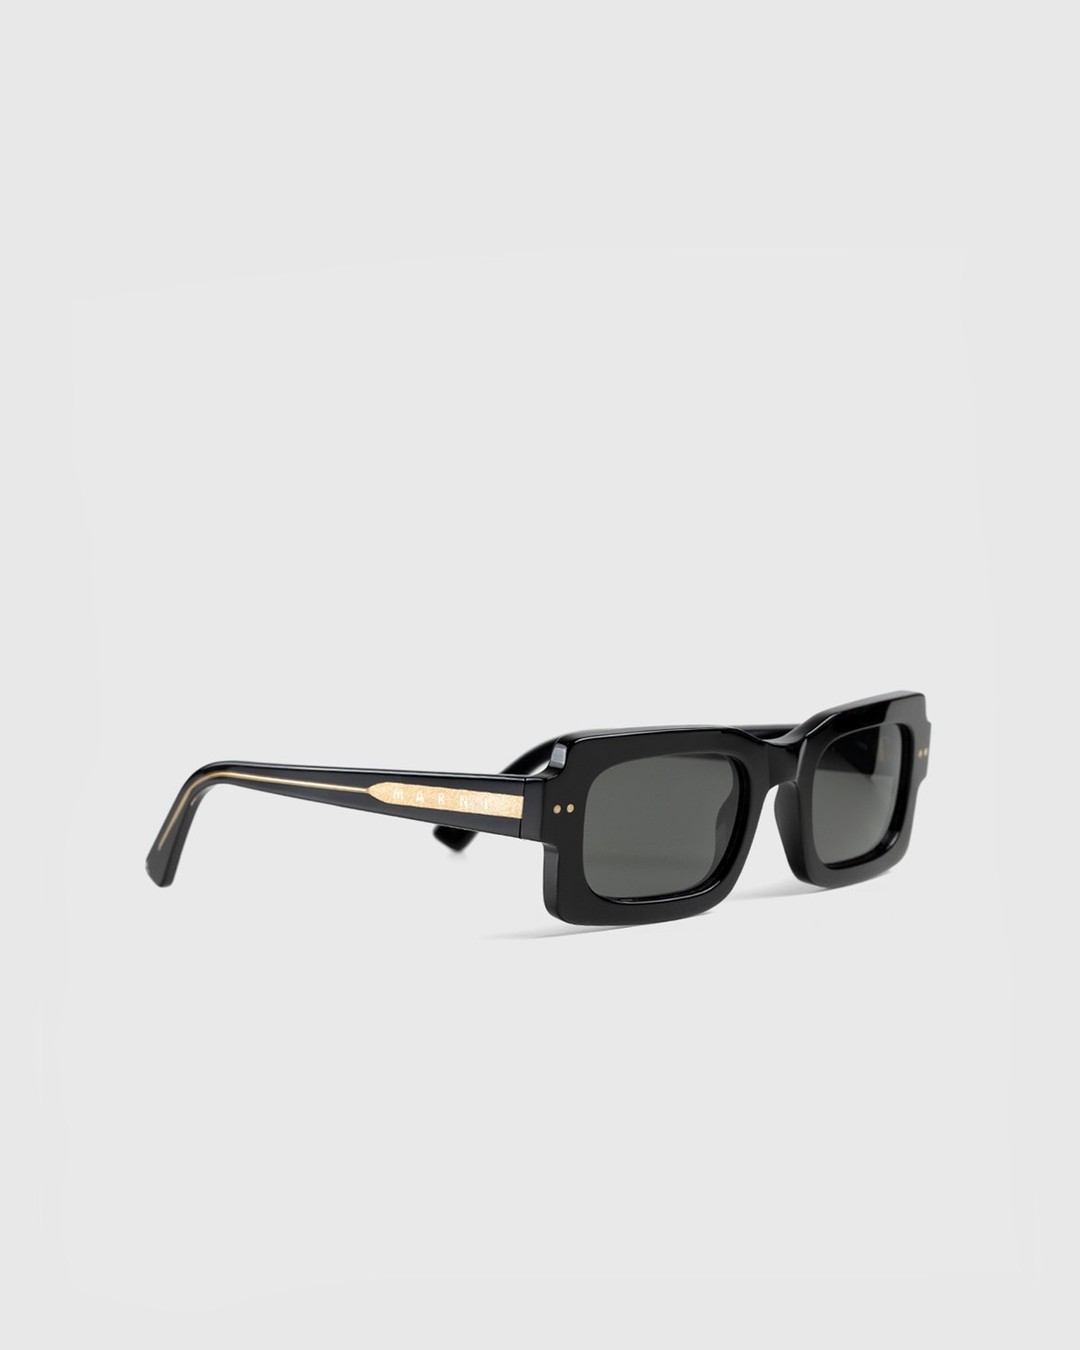 Marni – Lake Vostok Sunglasses Black - Eyewear - Black - Image 2